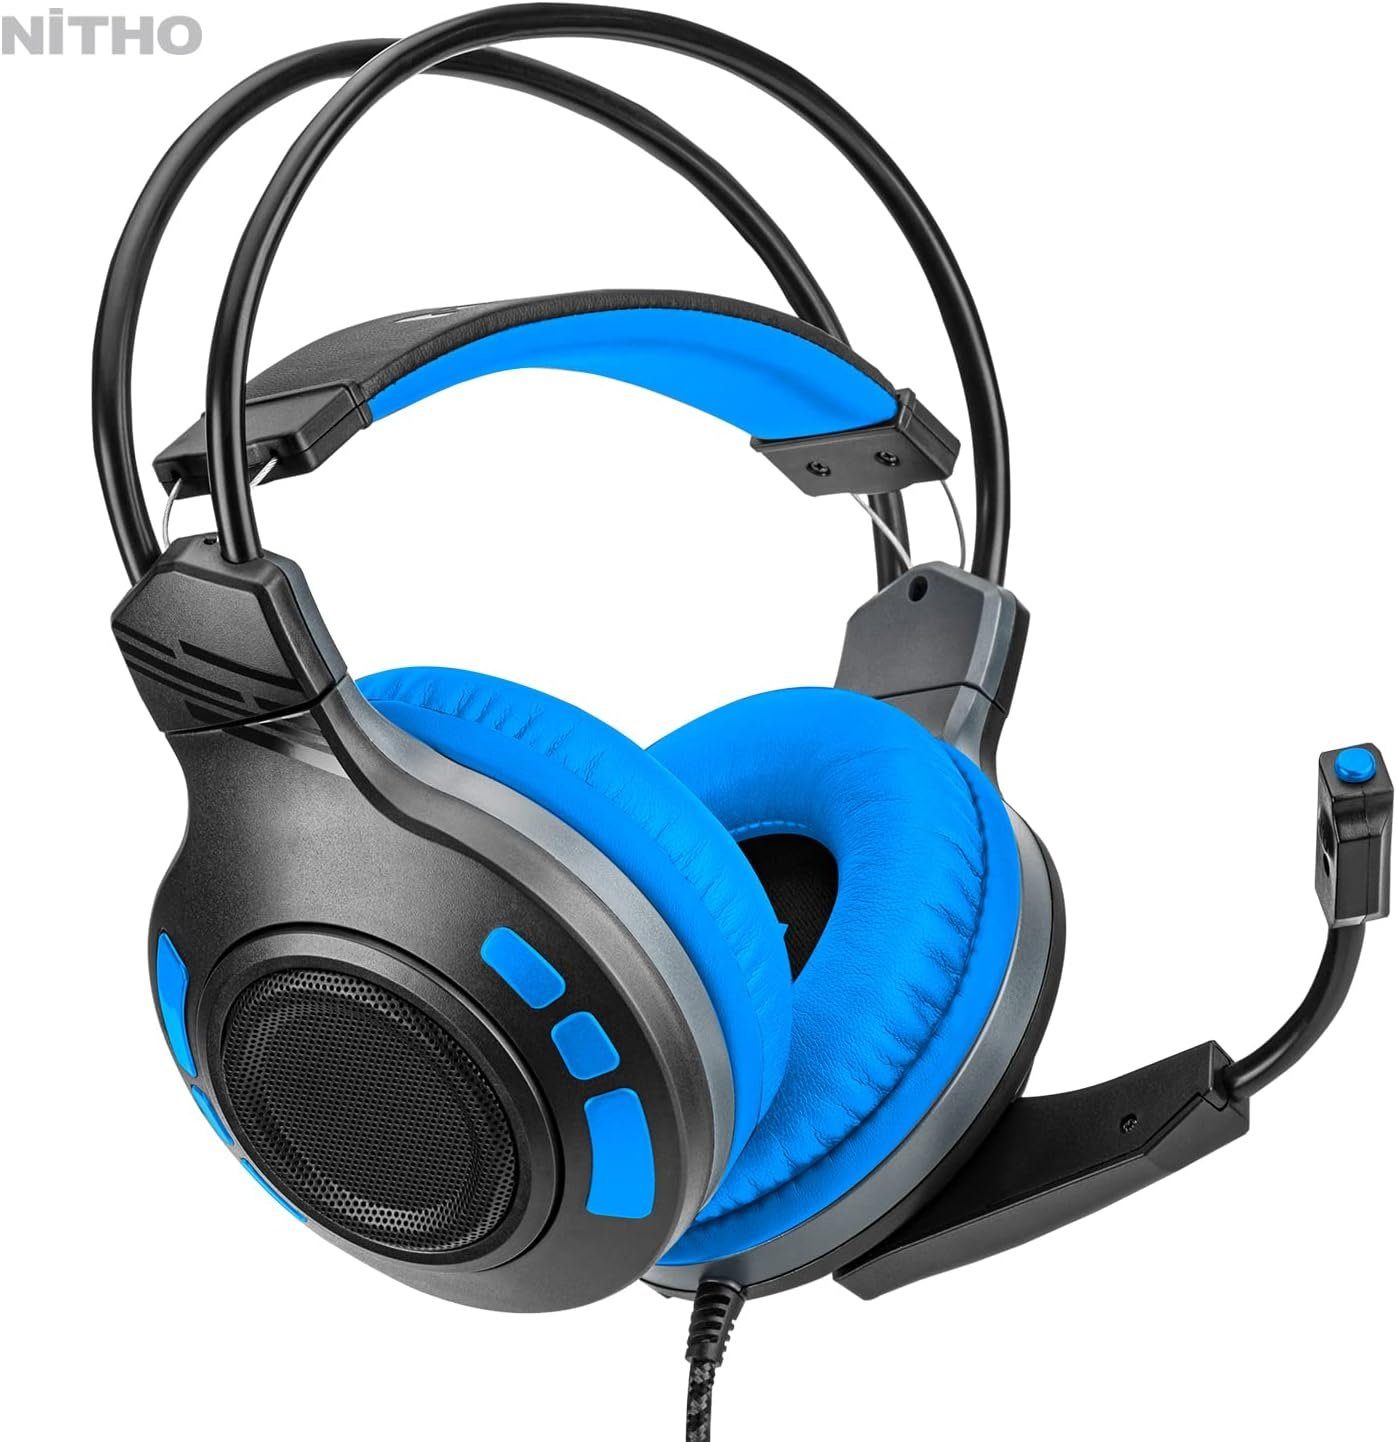 Kopfhörer kopfband) bügelmikrofon mit für NITHO Gaming Headset headset kopfhörer Head-Set, Gaming-Headset USB (Gaming treiber mit leichtem Bügelmikrofon,